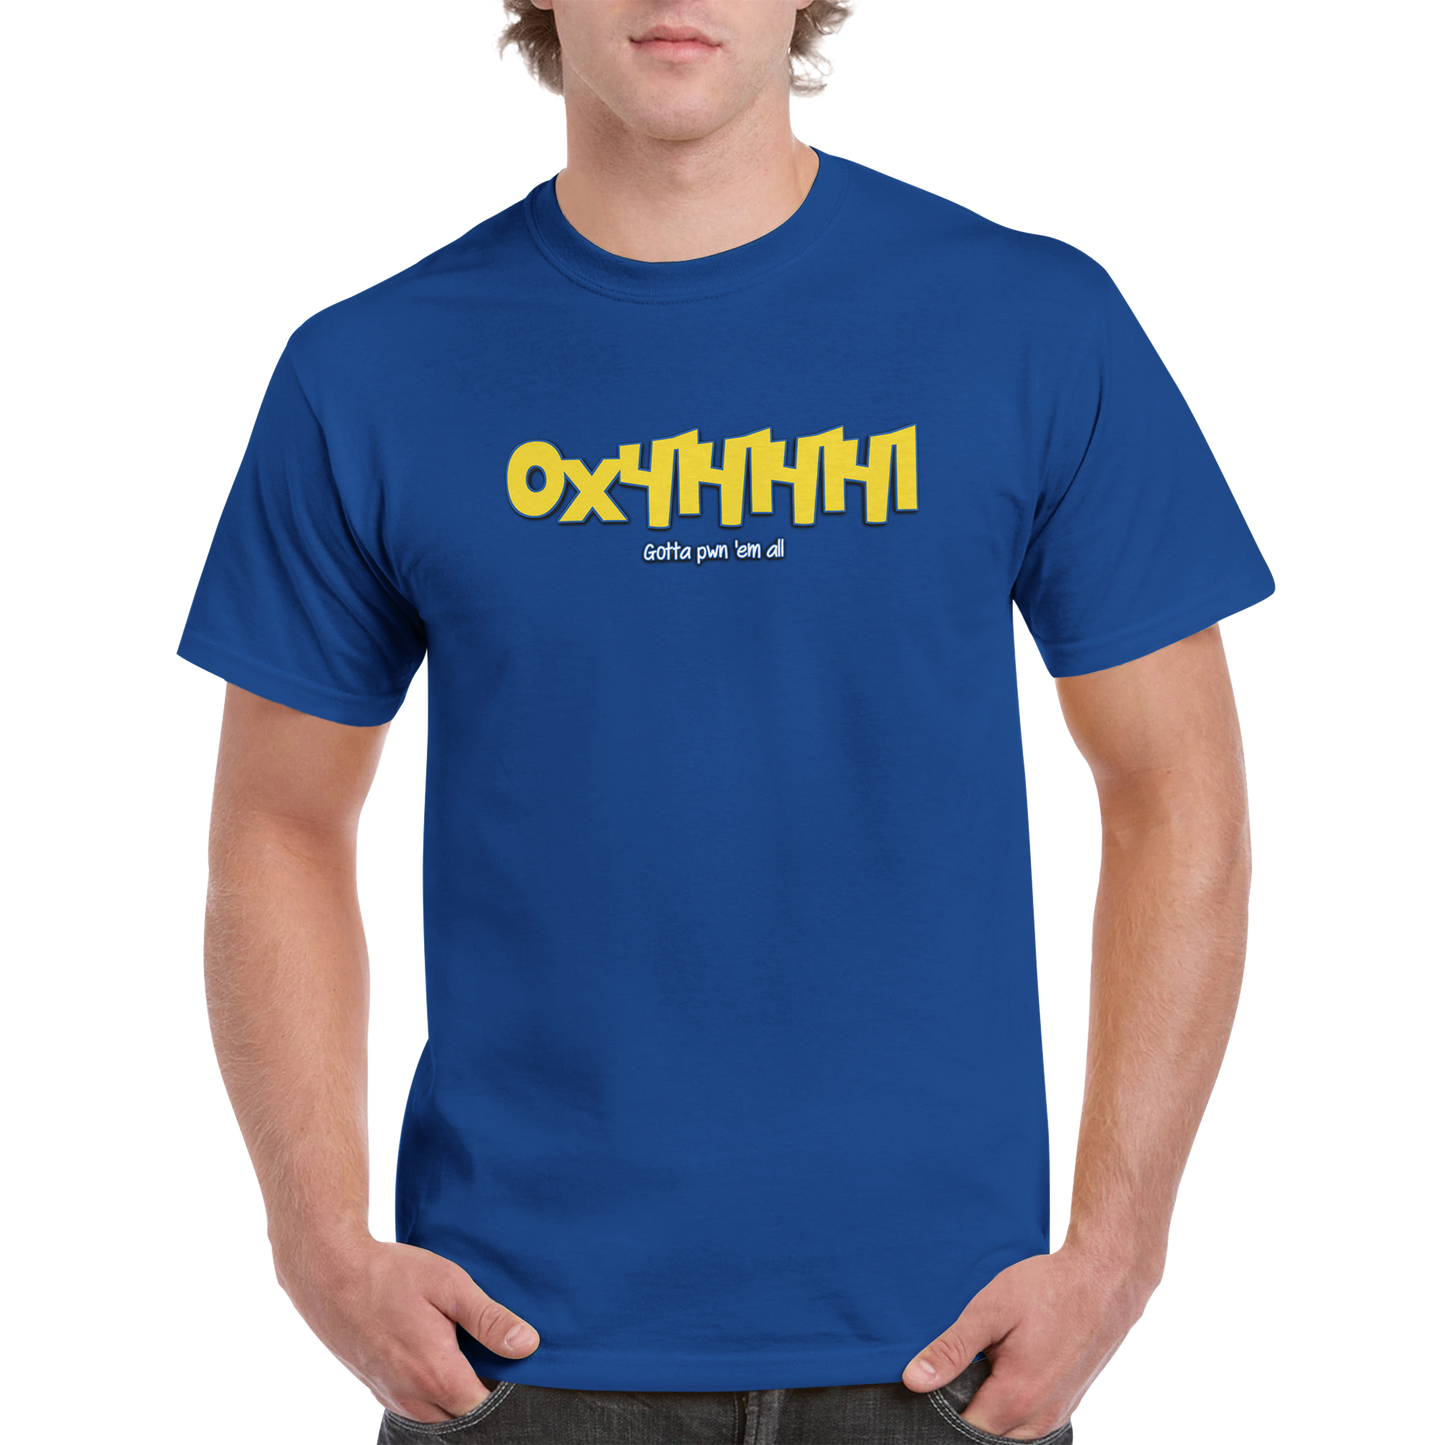 0x41414141 - Gotta pwn 'em all! Unisex T-Shirt